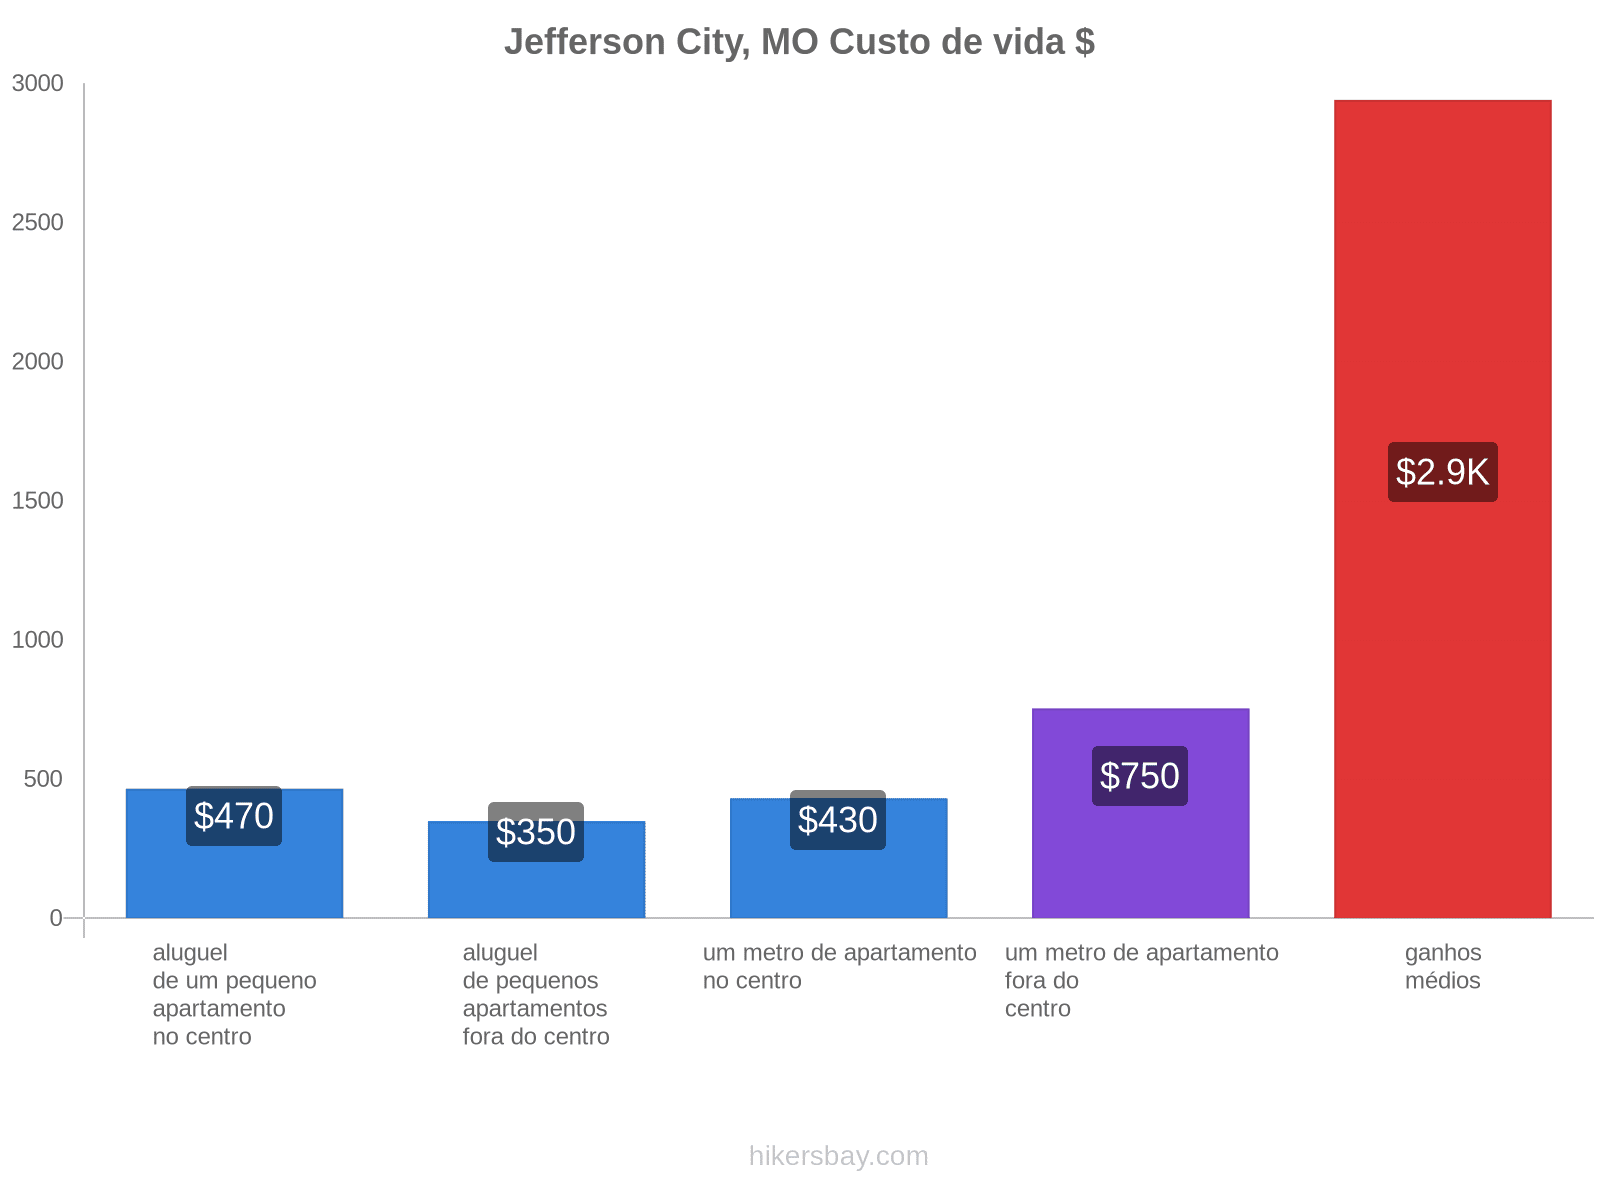 Jefferson City, MO custo de vida hikersbay.com